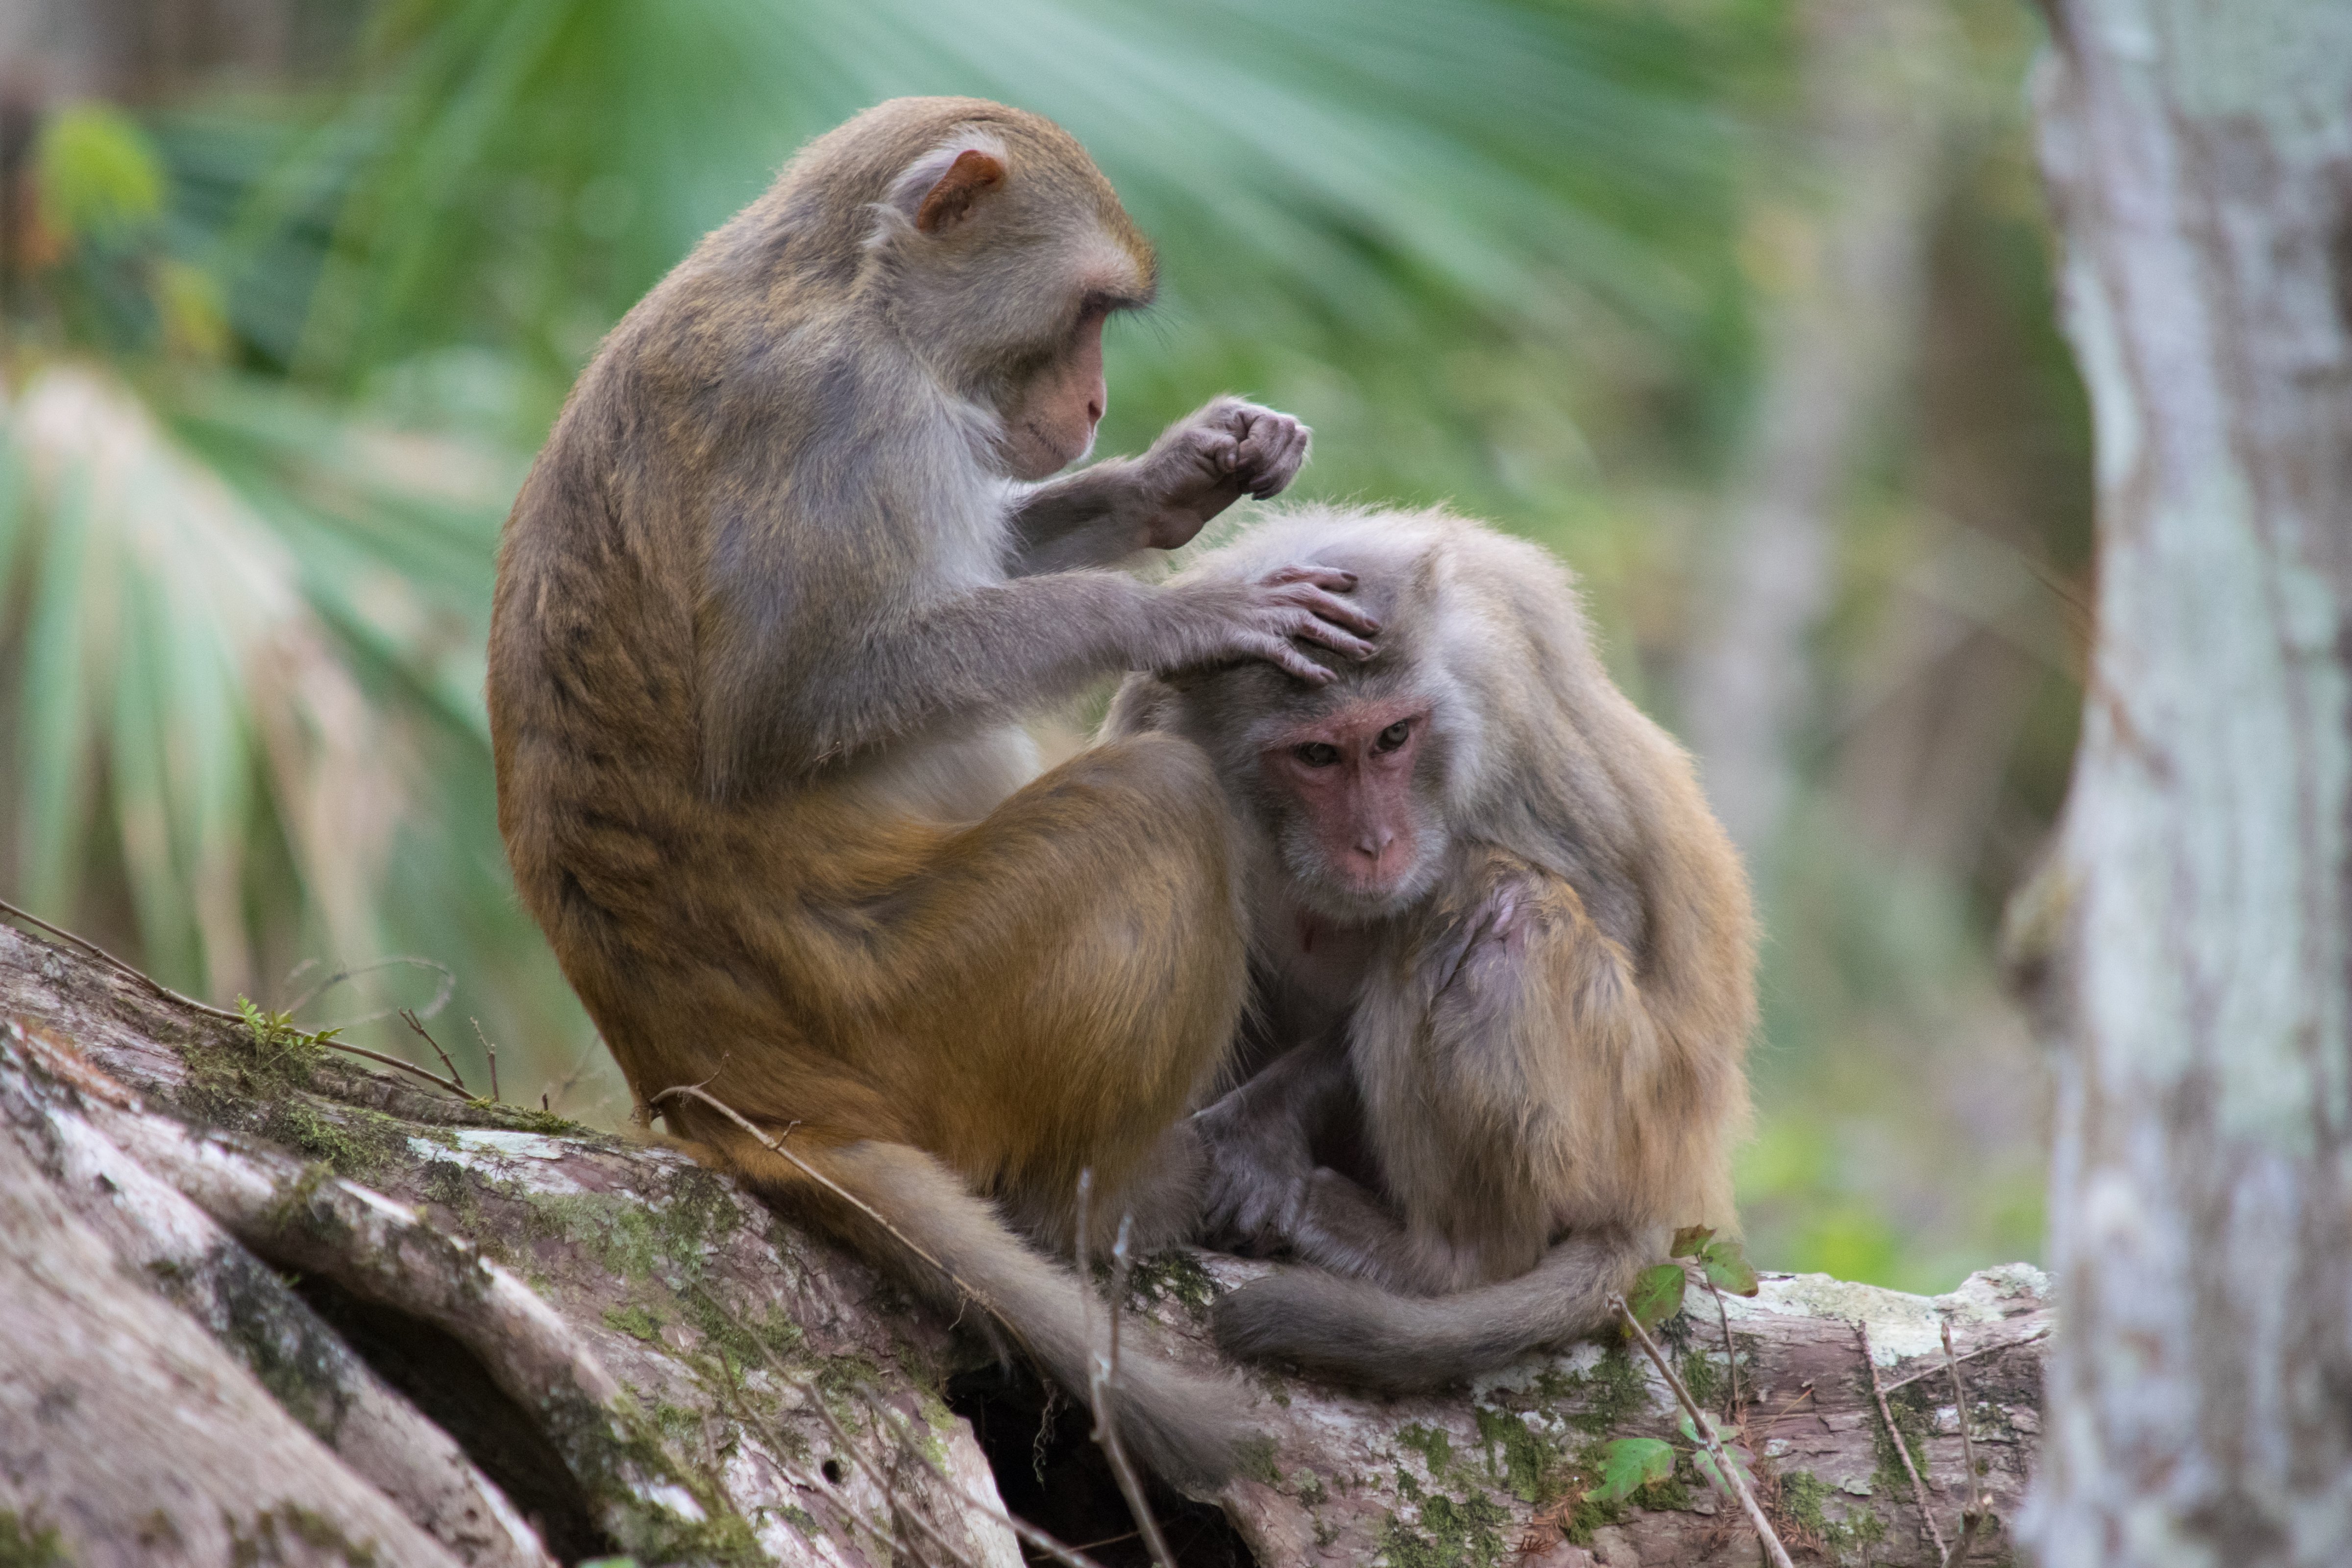 Wild monkeys inhabit the swamp along the Silver River in Ocala, Florida. (Michael Warren—Getty Images/iStockphoto)